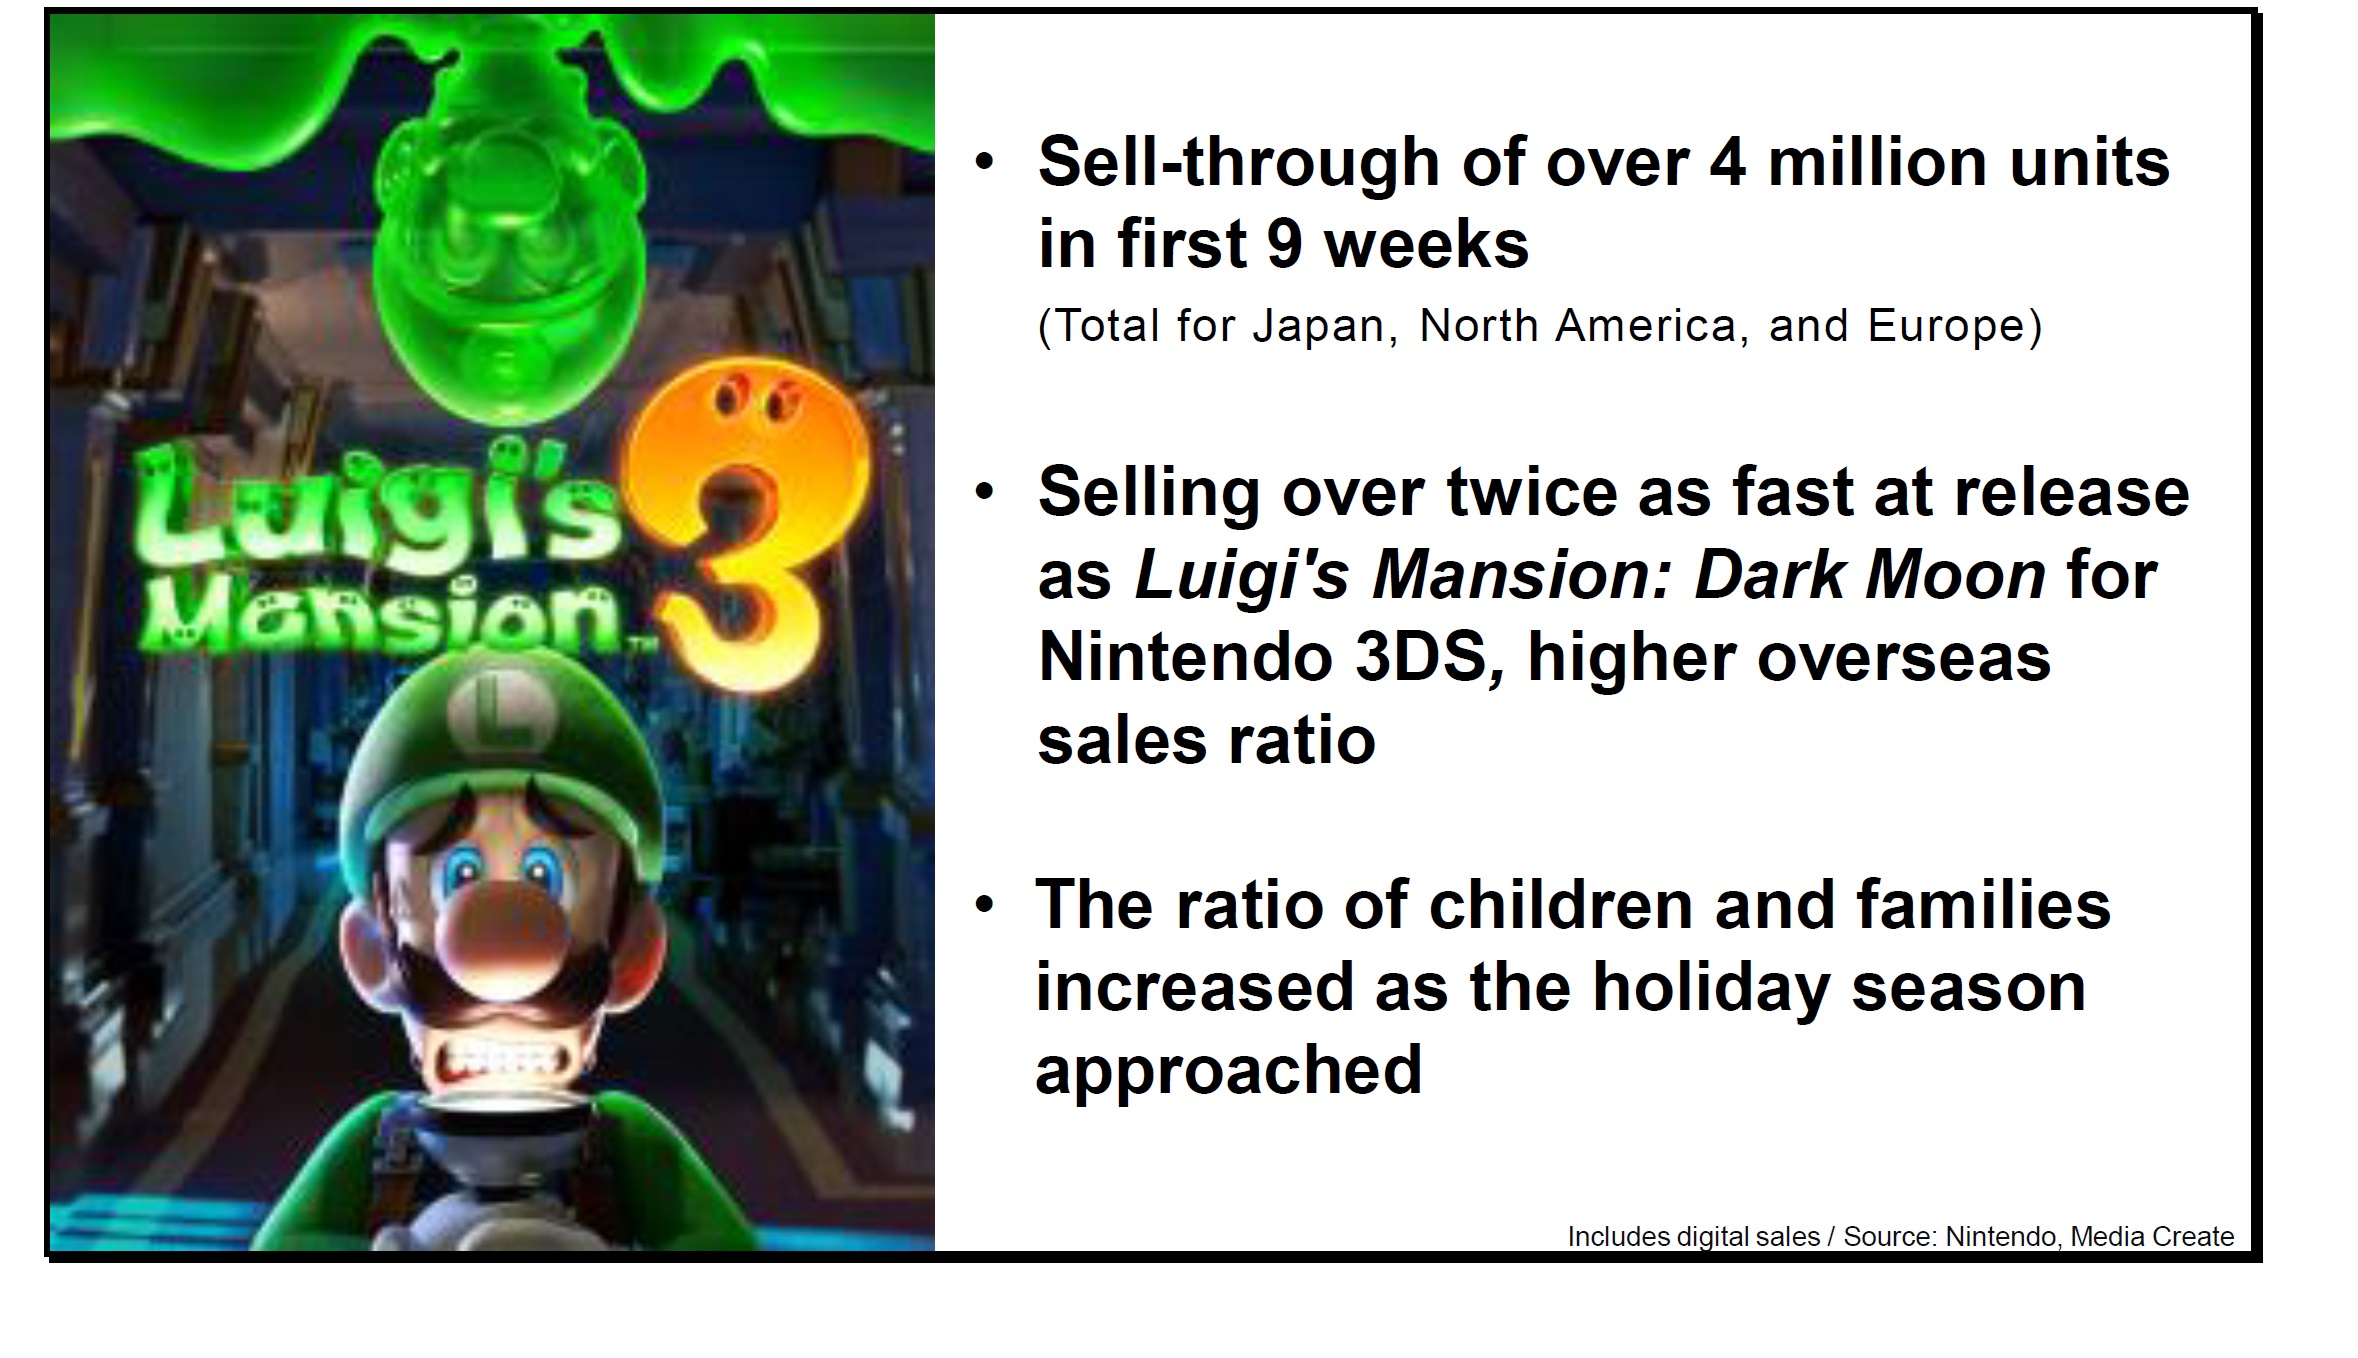 Nintendo on Luigi's Mansion 3 sales 